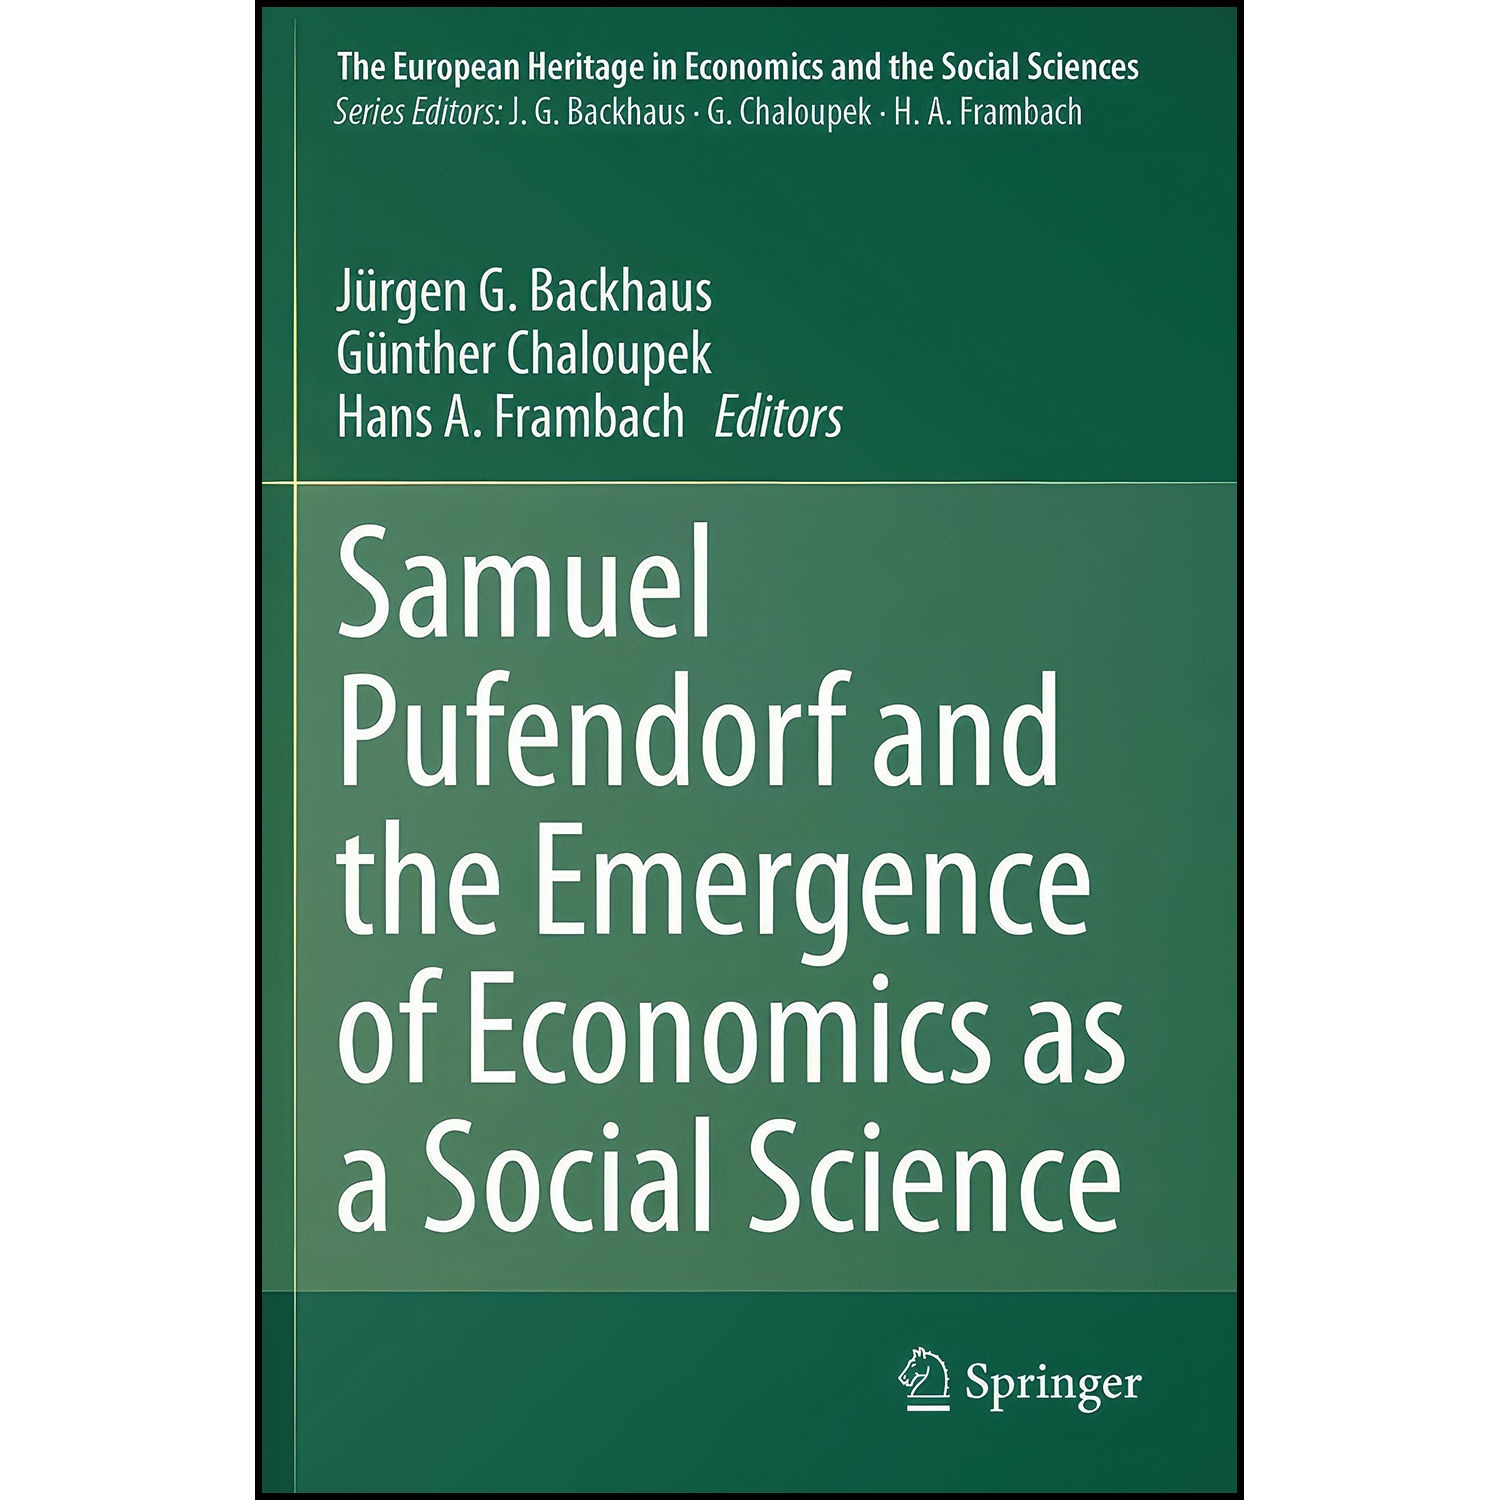 کتاب Samuel Pufendorf and the Emergence of Economics as a Social Science  اثر جمعي از نويسندگان انتشارات بله